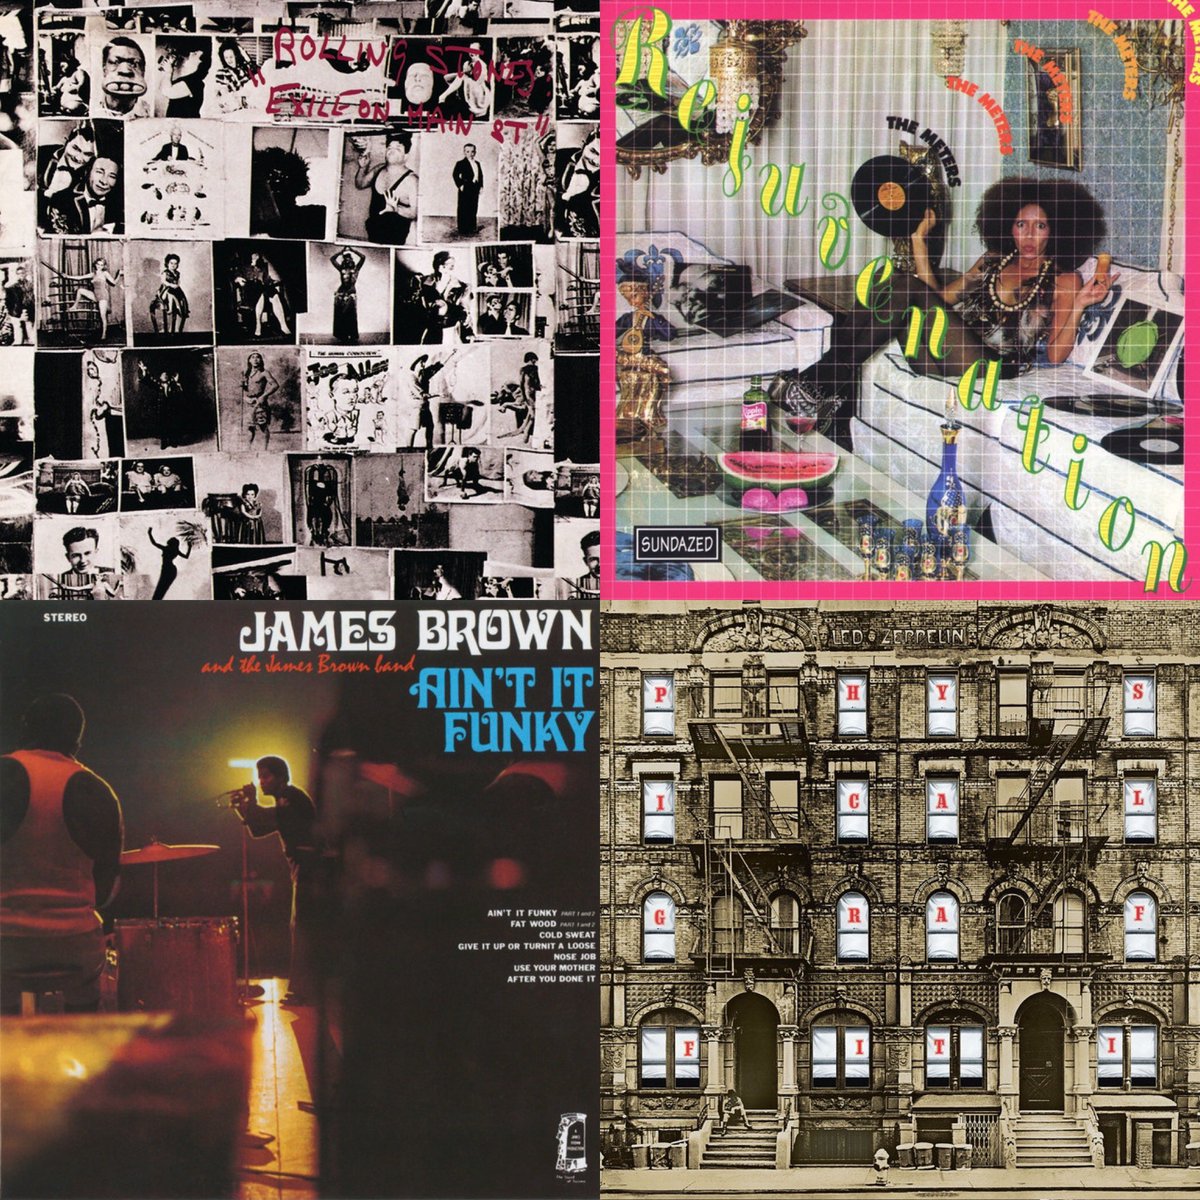 #MúsicaDesobediente Exile On Main St. @RollingStones 1972 #BluesRock #Rock #Soul #CountryRock 🇬🇧 | Rejuvenation • The Meters • 1974 #Funk 🇺🇸 | Ain't It Funky • James Brown & The James Brown Band • 1970 #JazzFunk #Jazz 🇺🇸 | Physical Graffiti @ledzeppelin 1975 #HardRock 🇬🇧